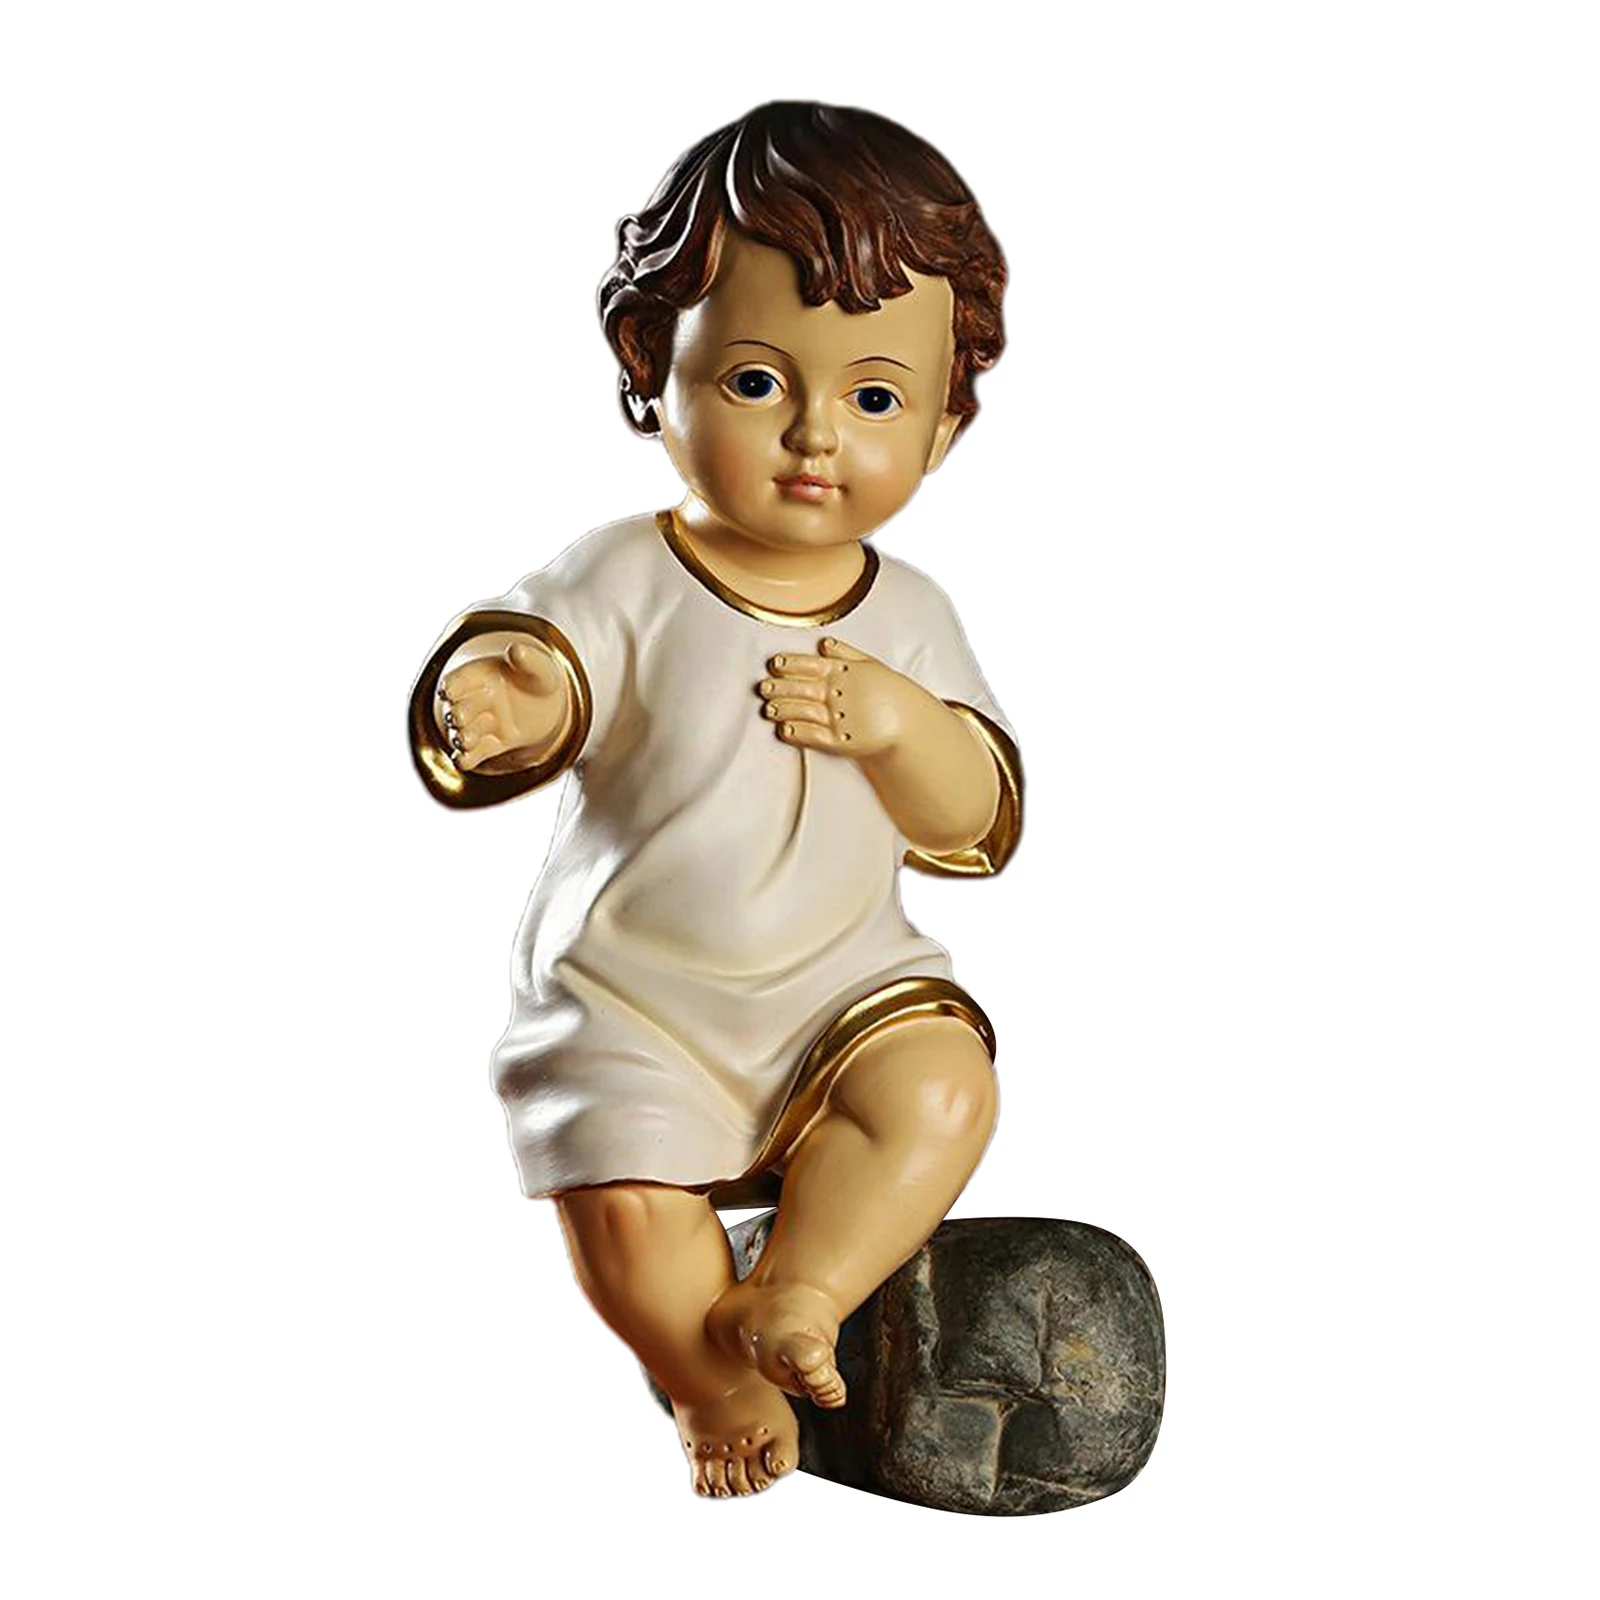 European Baby Statue Jesus Doll Statue Figurine Indoor Outdoor Home Little Boy Sculpture Statuette Collection Memorial Statue